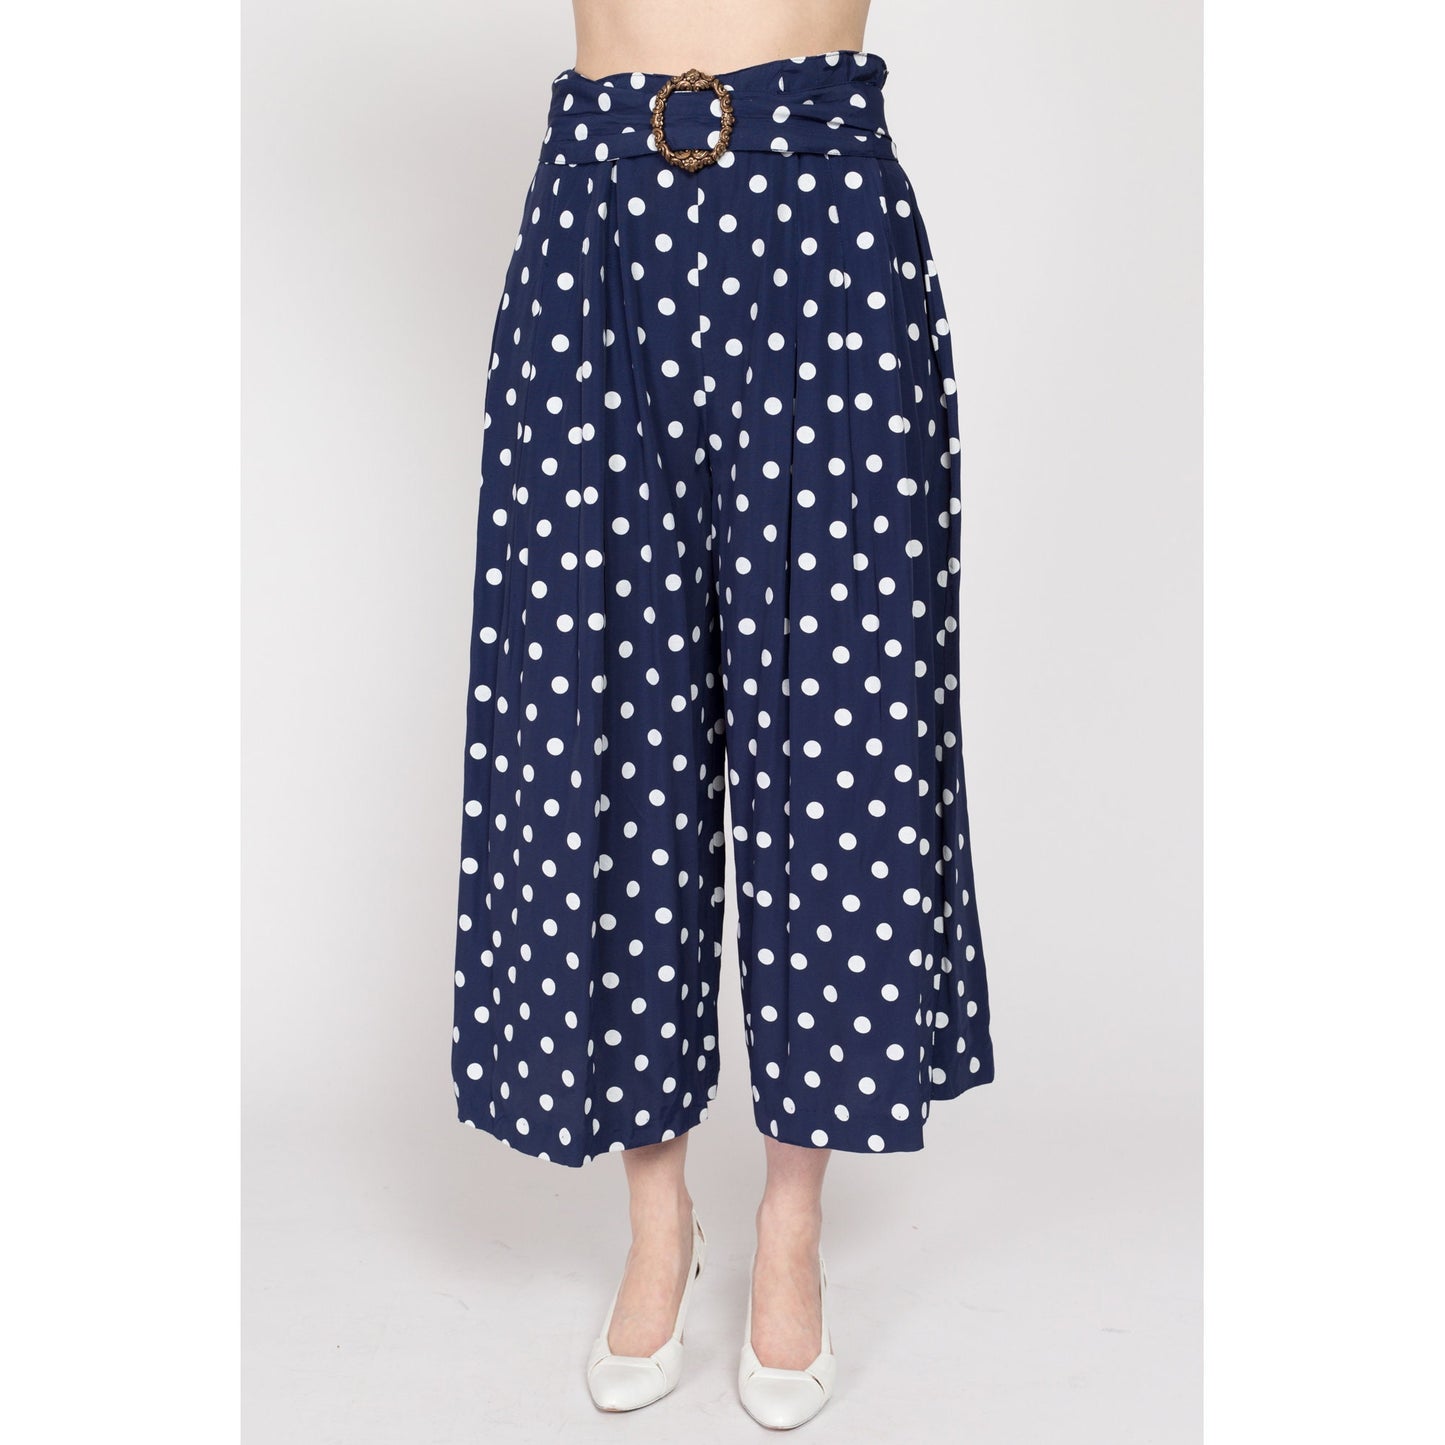 Medium 80s Navy Blue Polka Dot Belted Culotte Pants 30" | Vintage Wide Leg High Waisted Capri Trousers